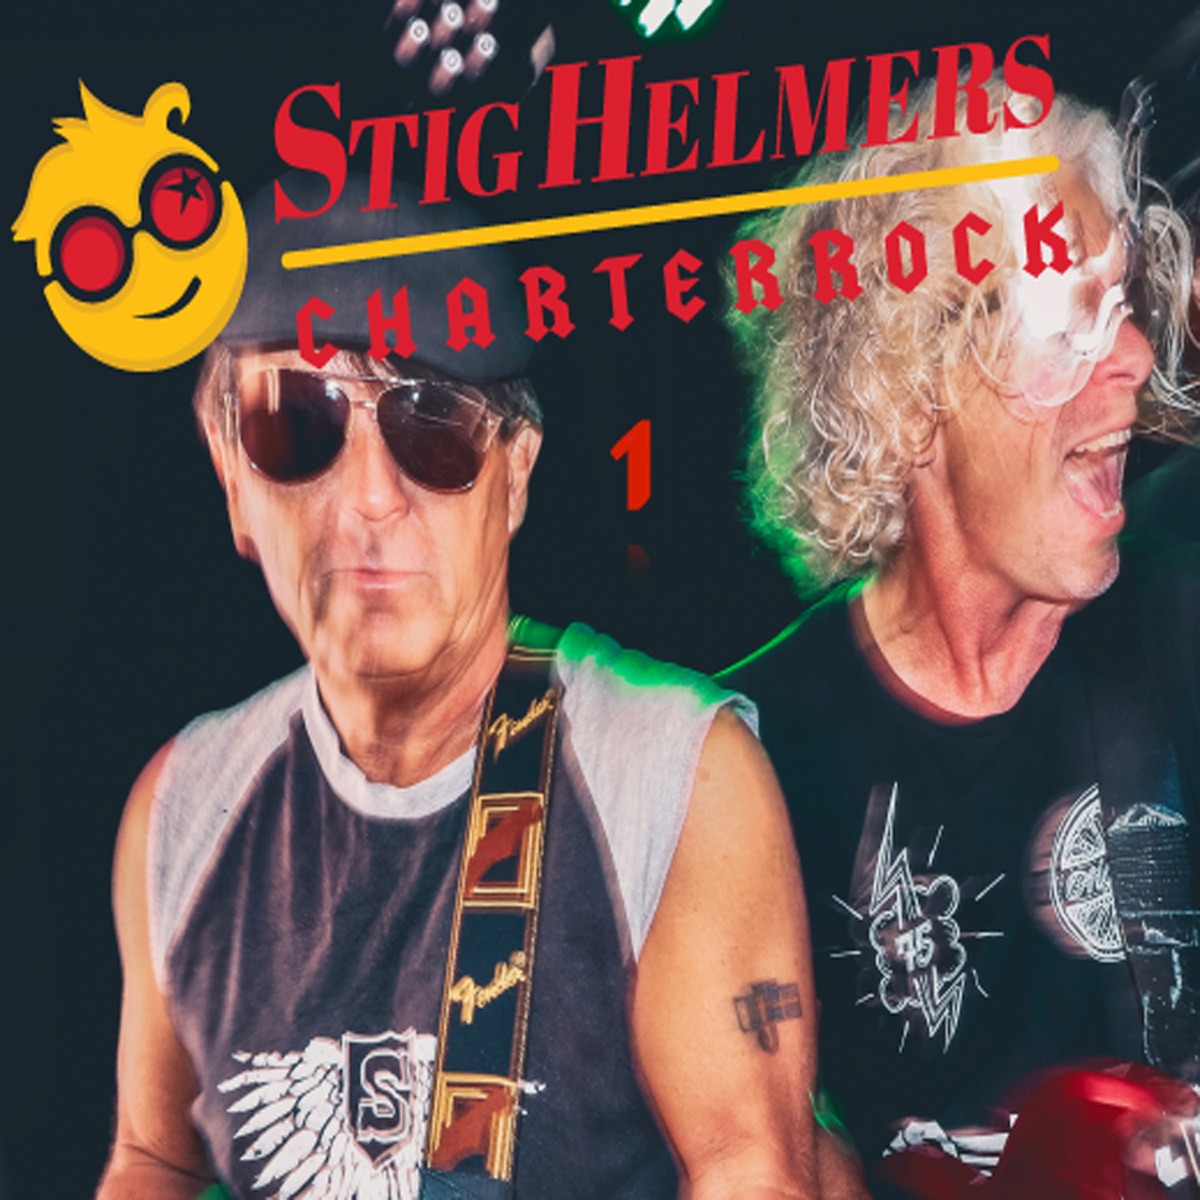 CharterRock 1 - Album by Stig Helmers - Apple Music